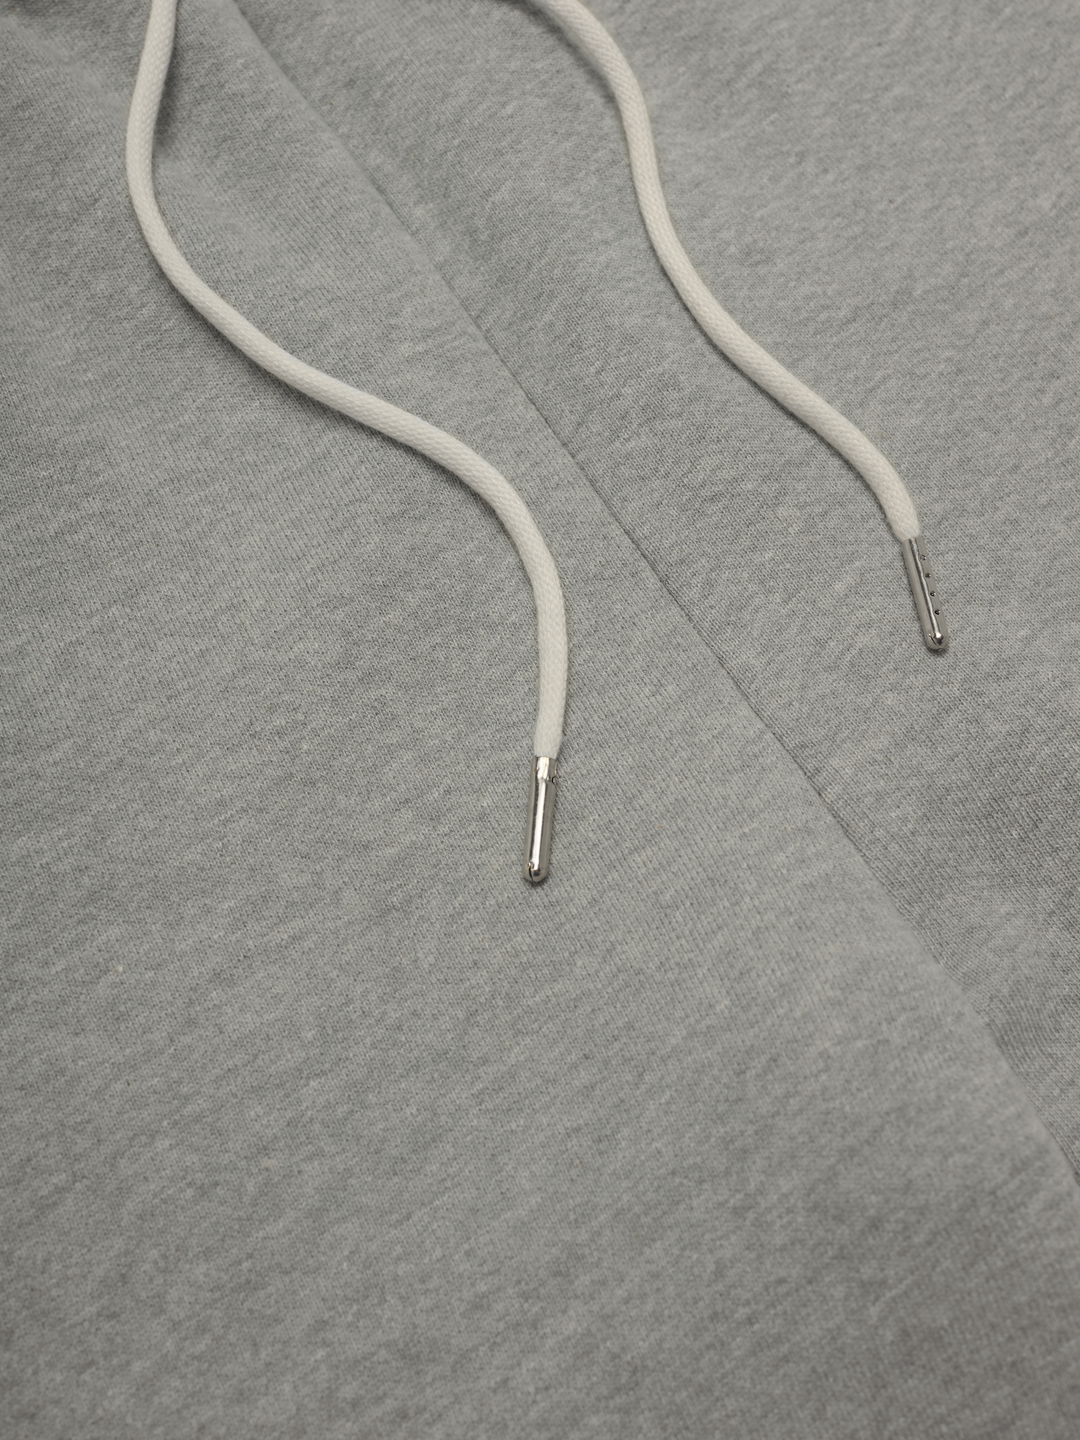 Fundamentals Brushed Fleece Sweatpant Grey - Detail